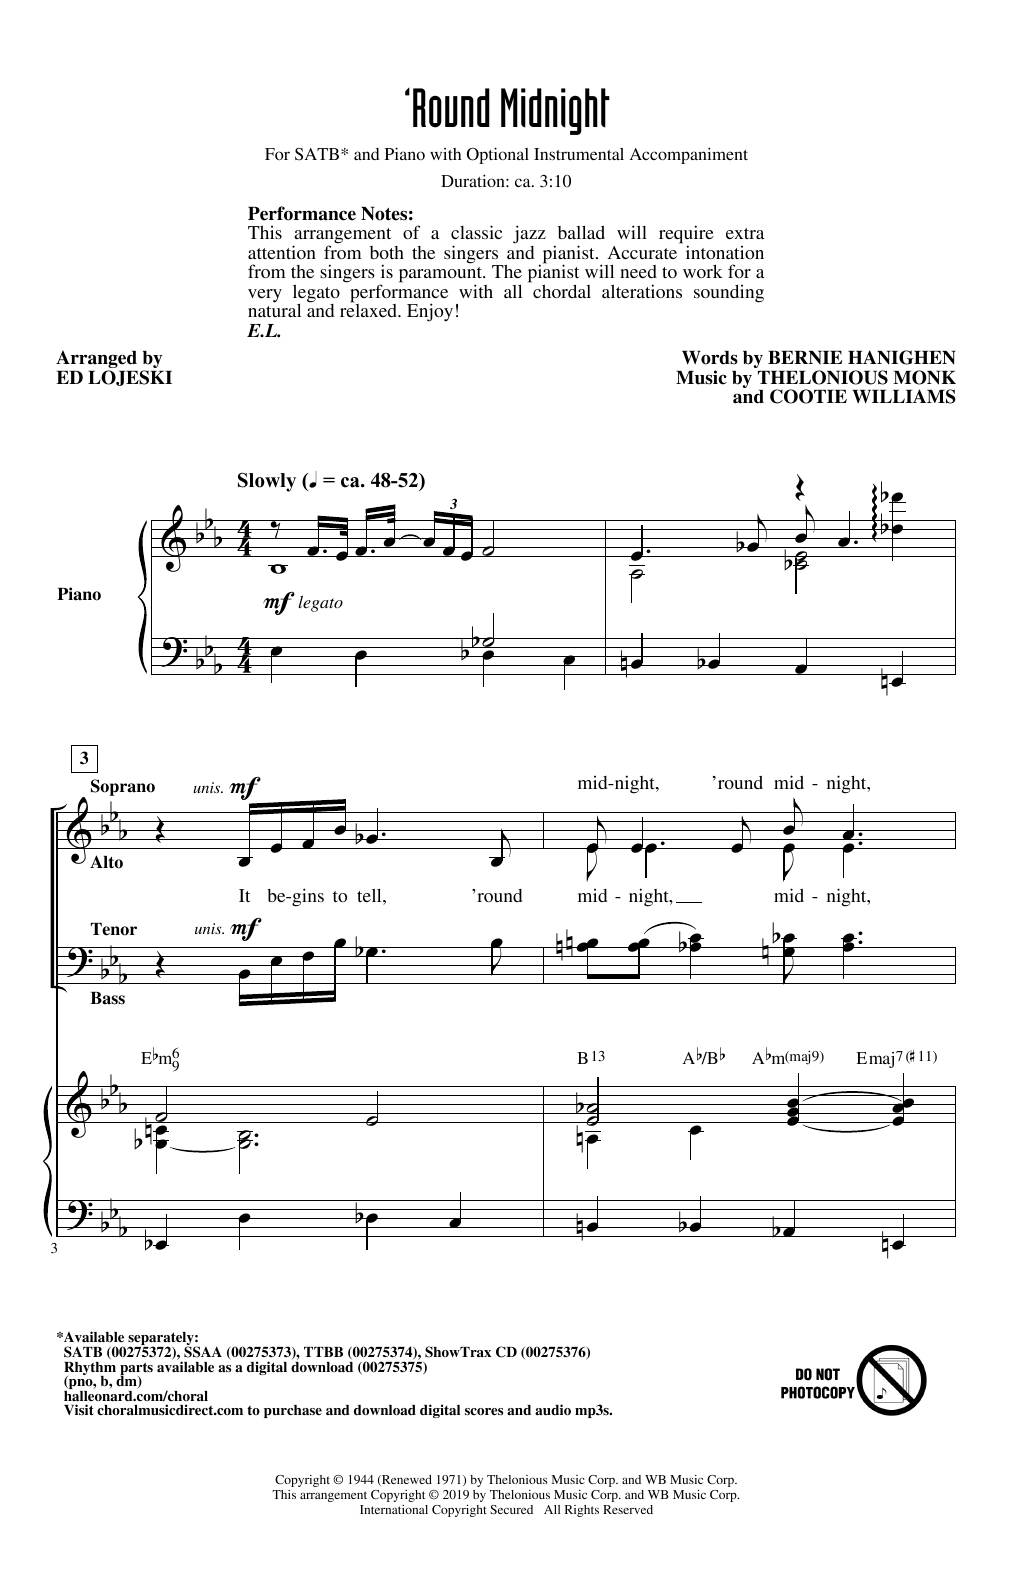 Thelonious Monk 'Round Midnight (arr. Ed Lojeski) Sheet Music Notes & Chords for TTBB Choir - Download or Print PDF